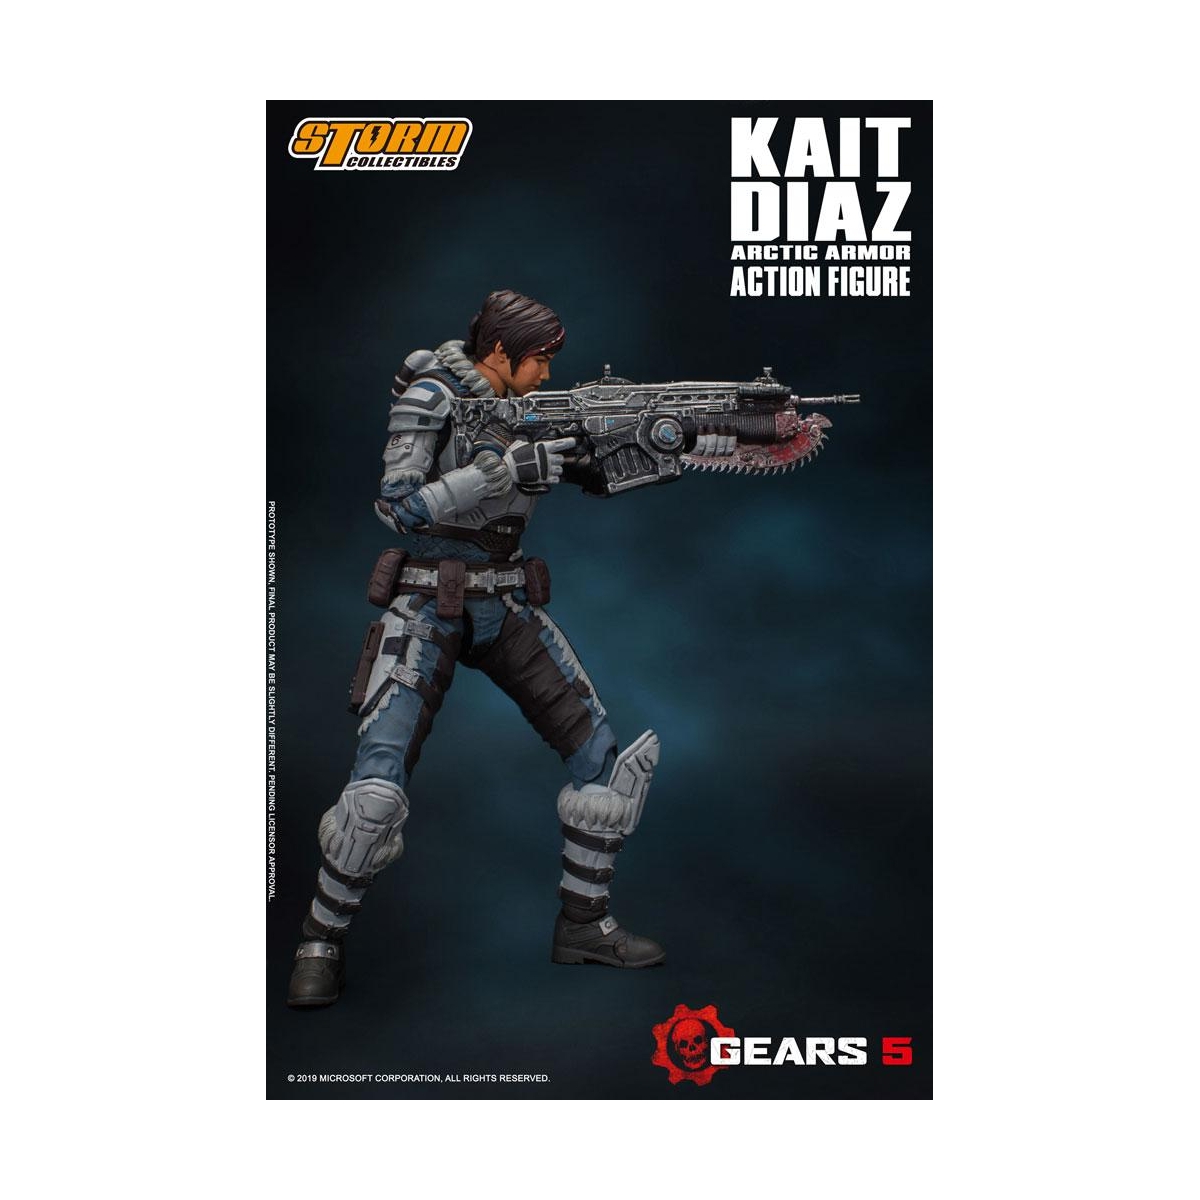 KAIT DIAZ ARCTIC ARMOR - GEARS OF WAR 5 Action Figure – Storm Collectibles